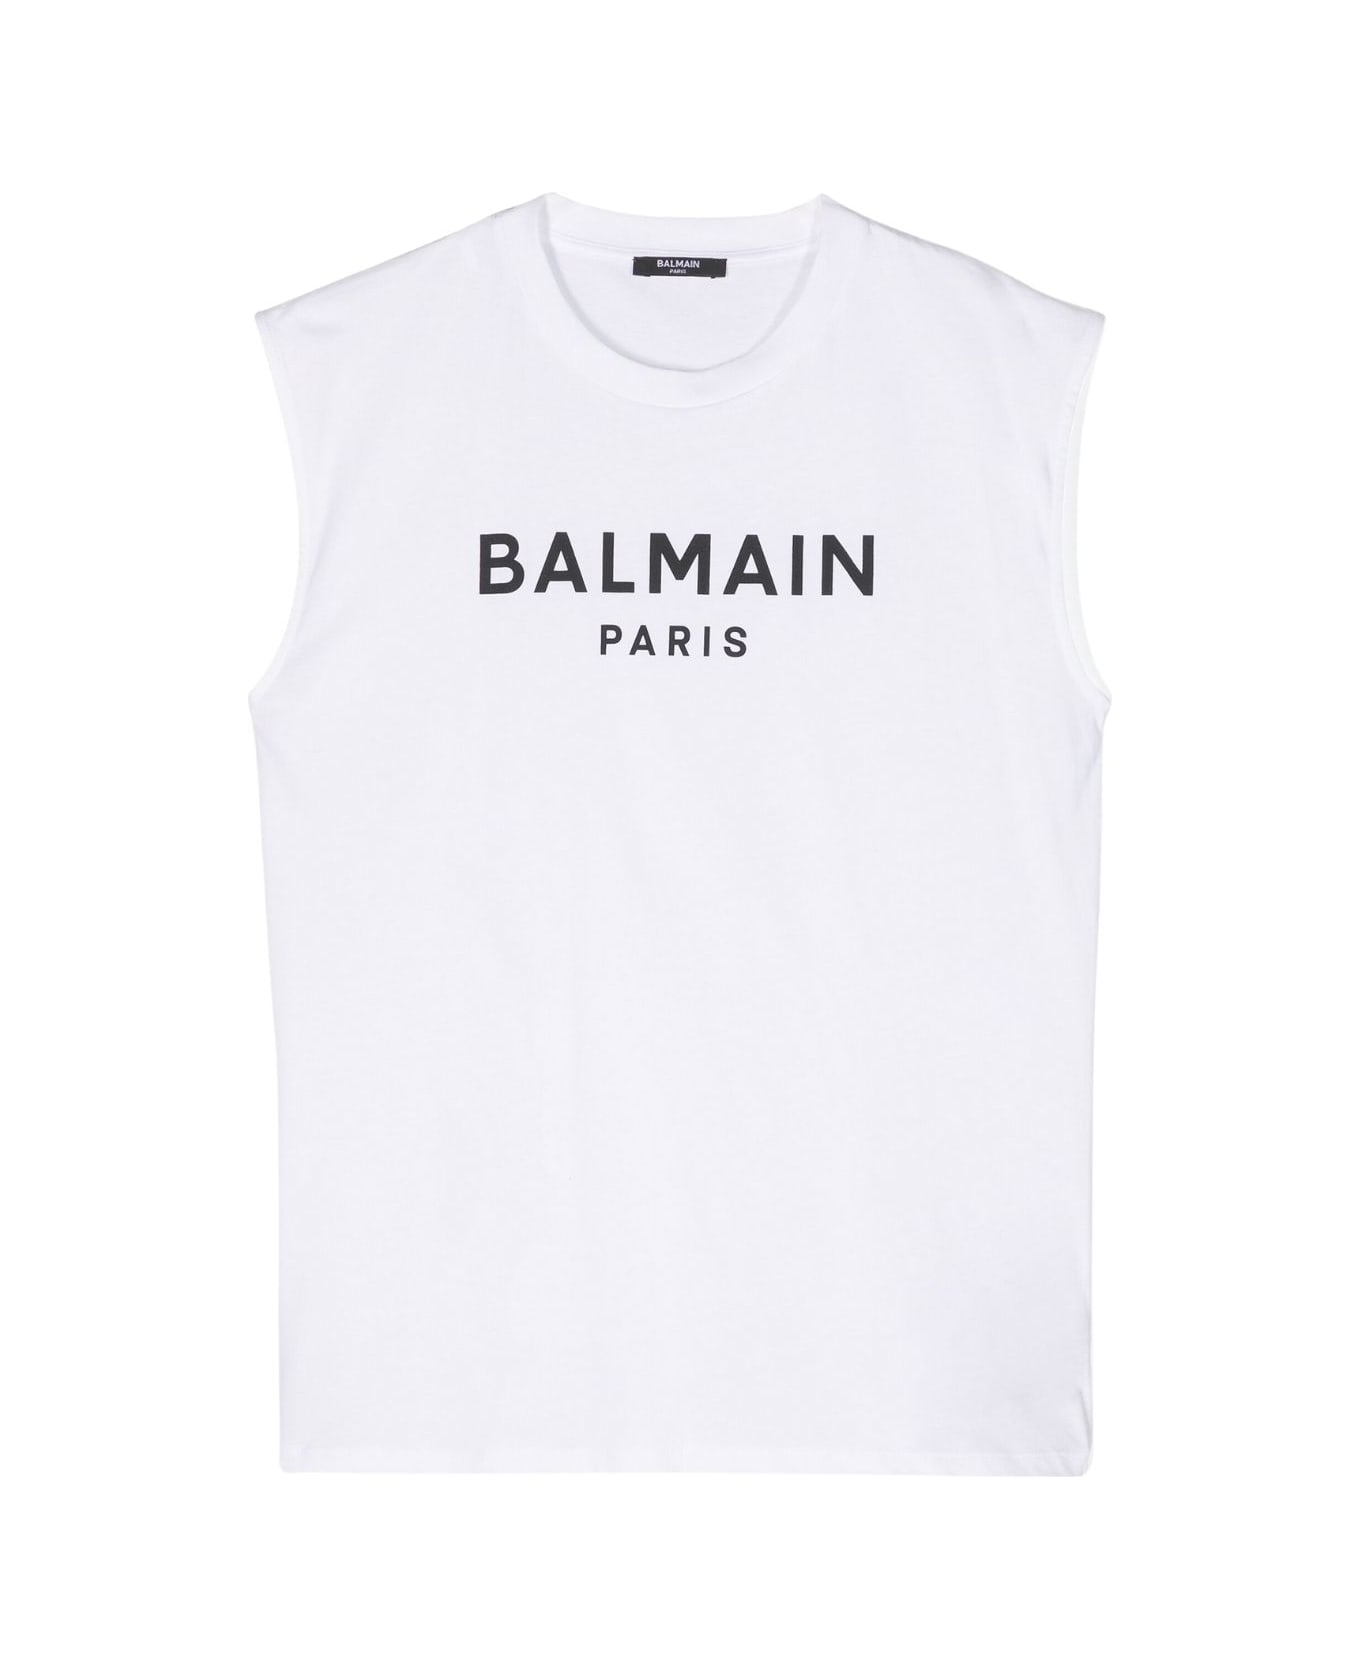 Balmain T Shirt - neill lm true polo